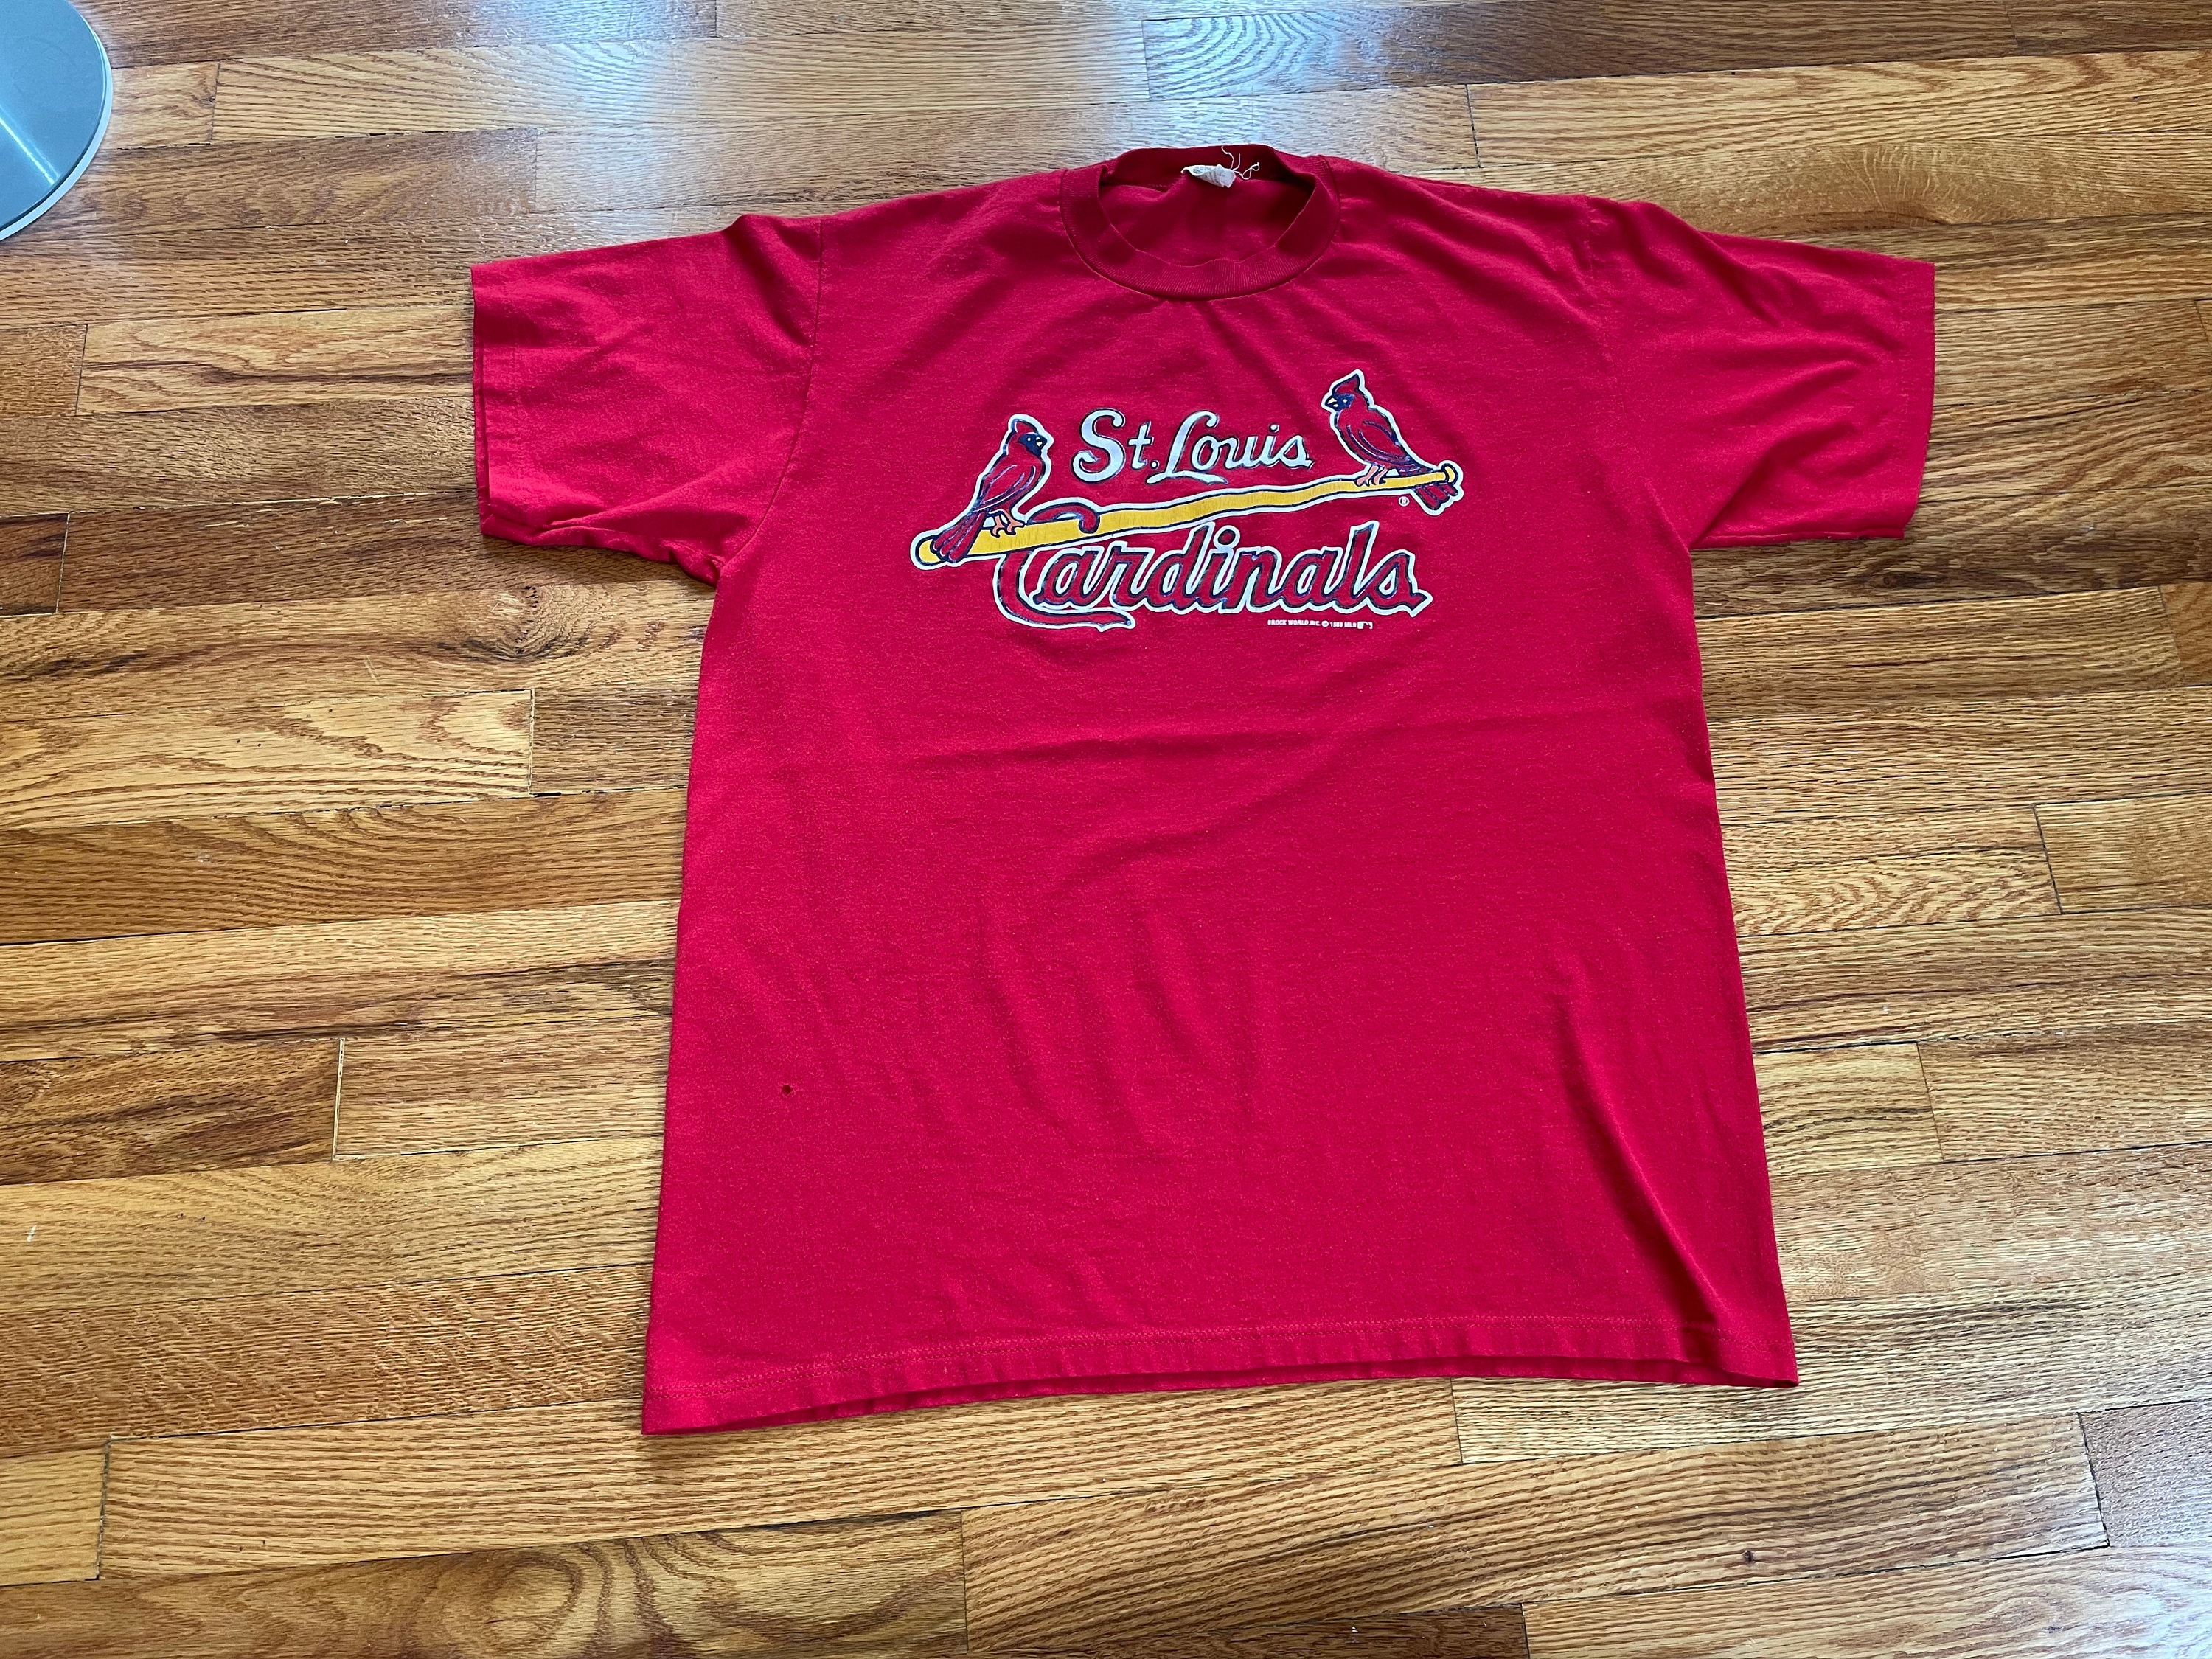 MLB St Louis Cardinals Gear for Sports T-Shirt LG Red Grandma of Groom 09  New